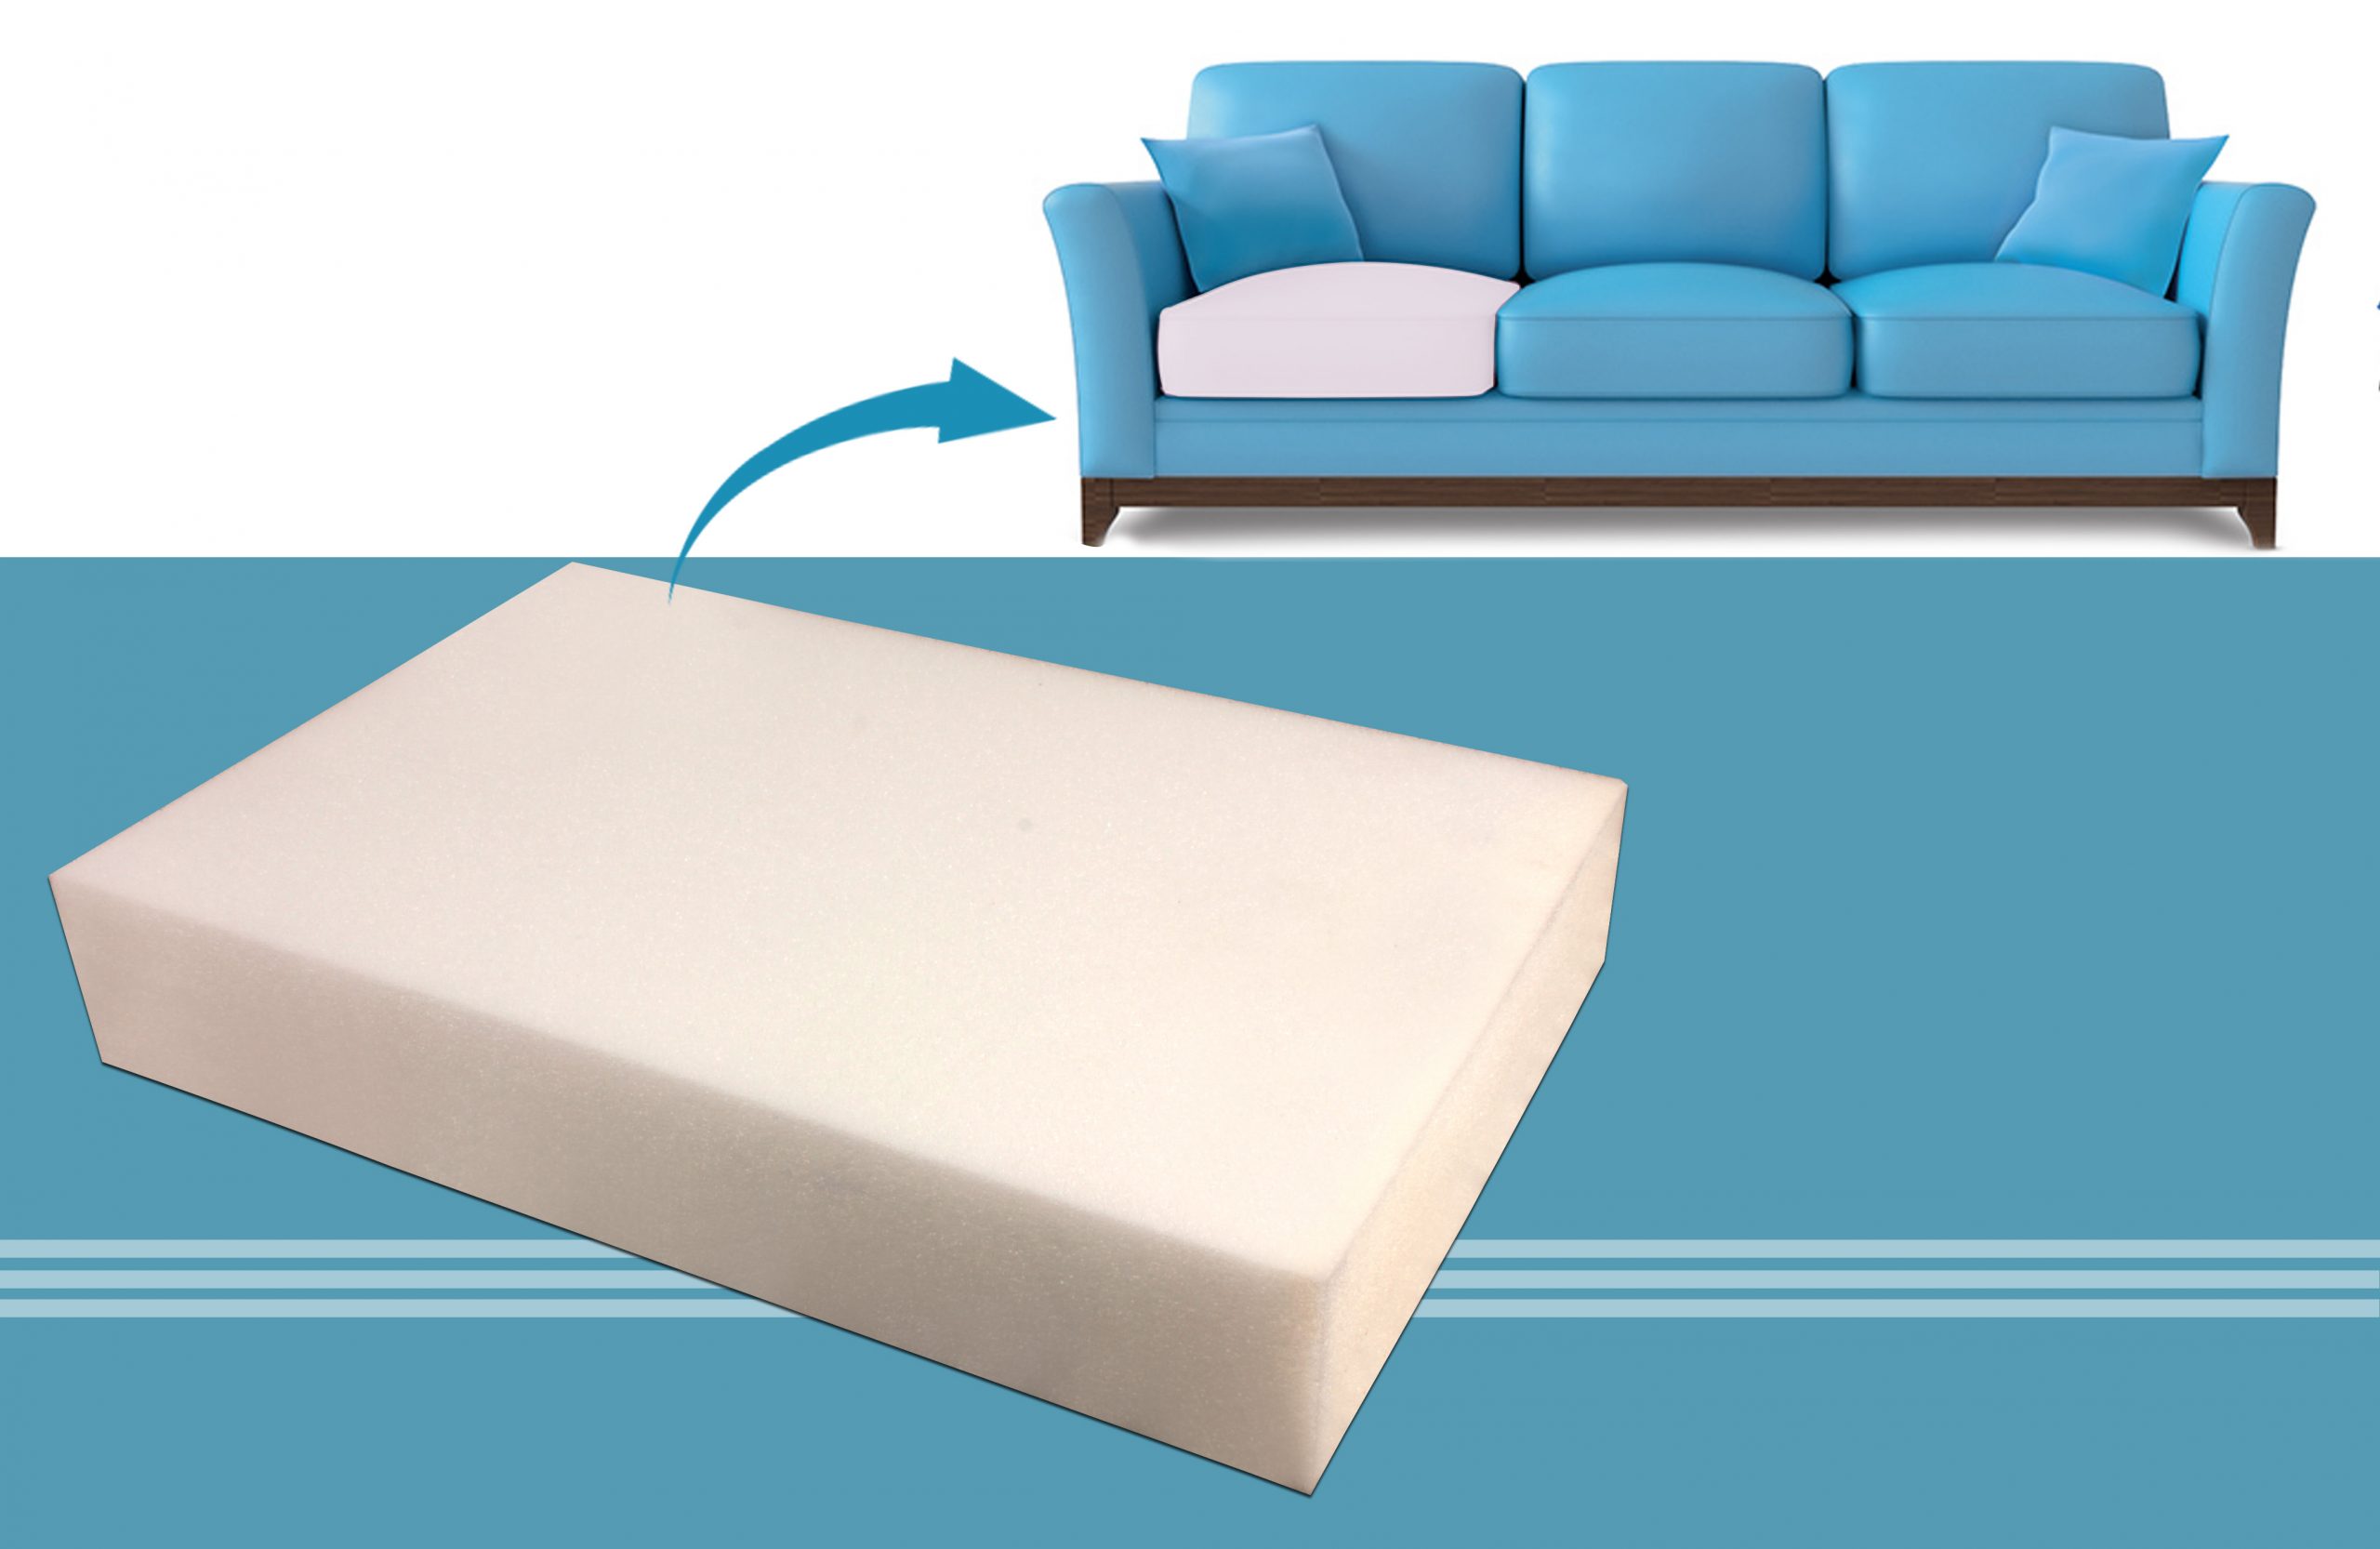 Характеристики пенополиуретана для дивана